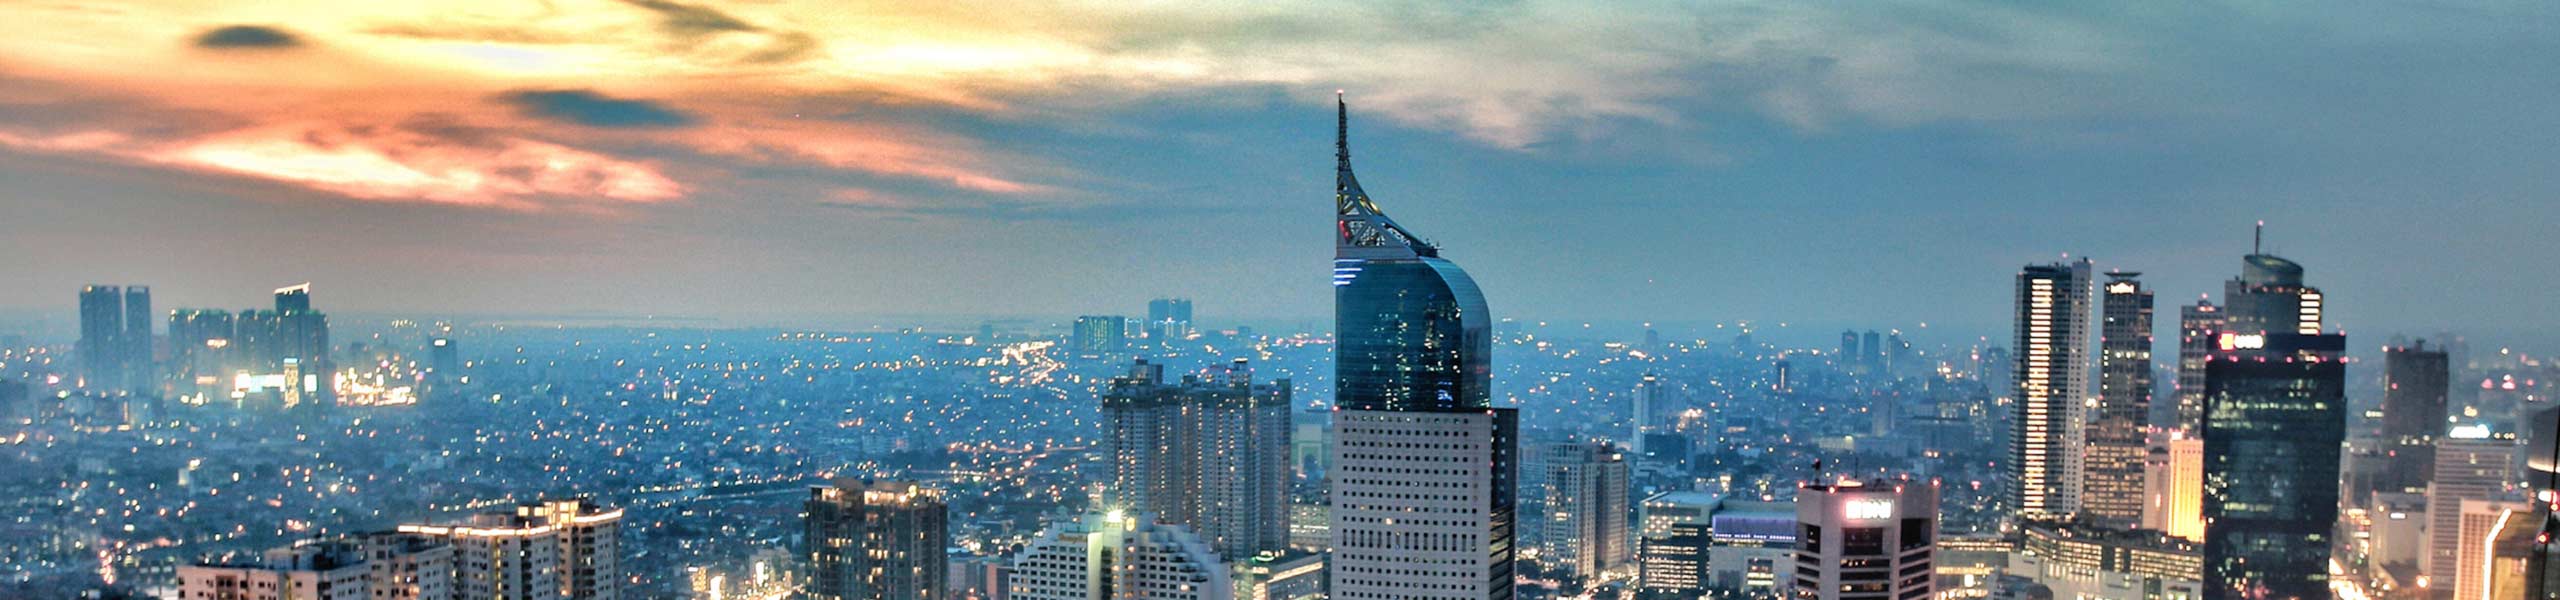 City skyline at sunset, Jakarta, Indonesia